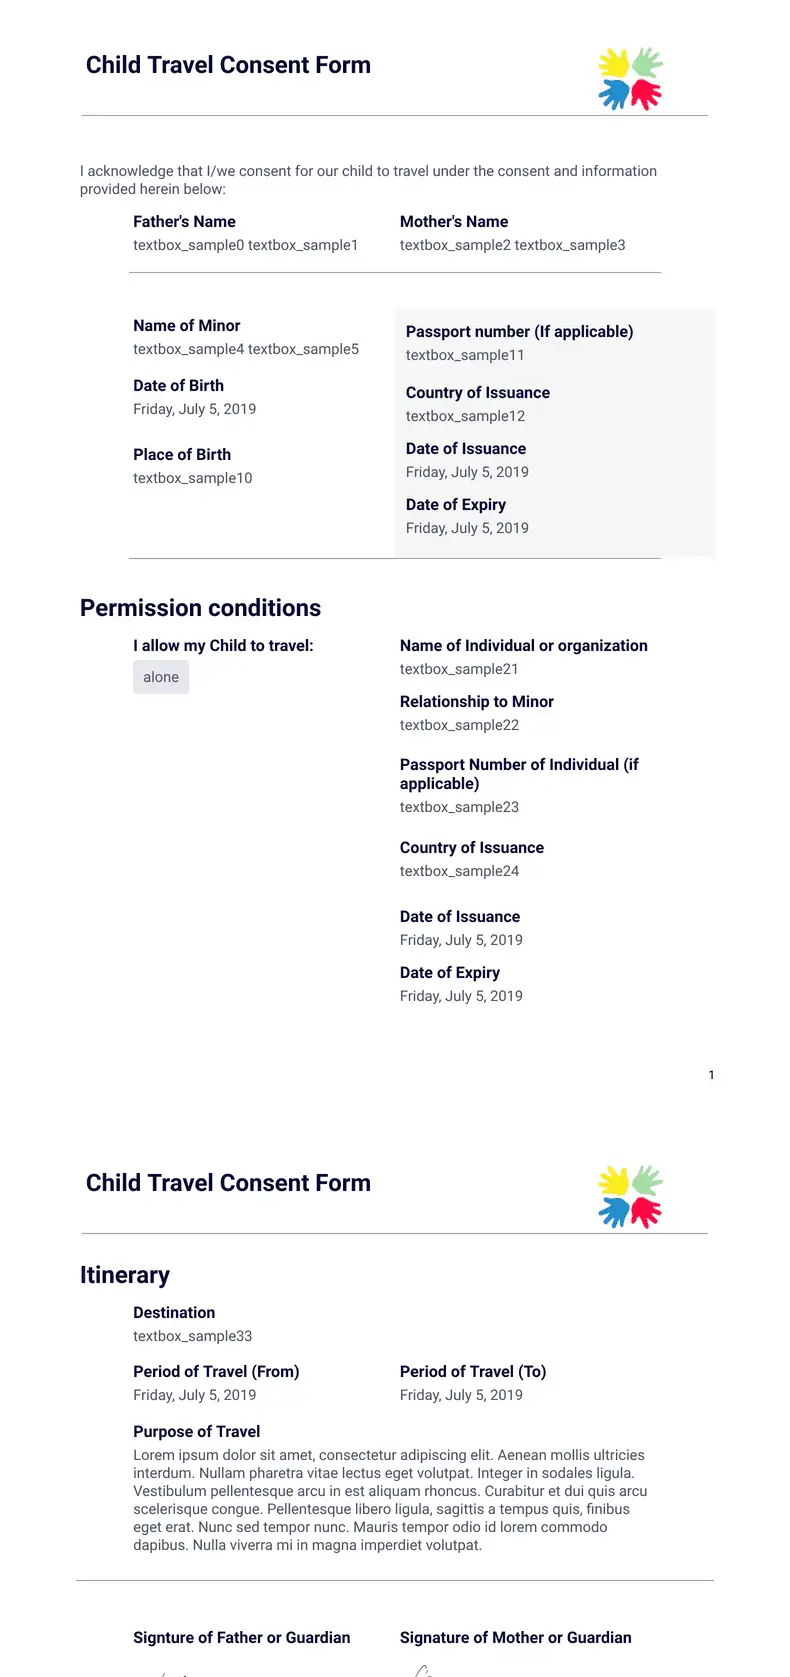 Child Travel Consent Form